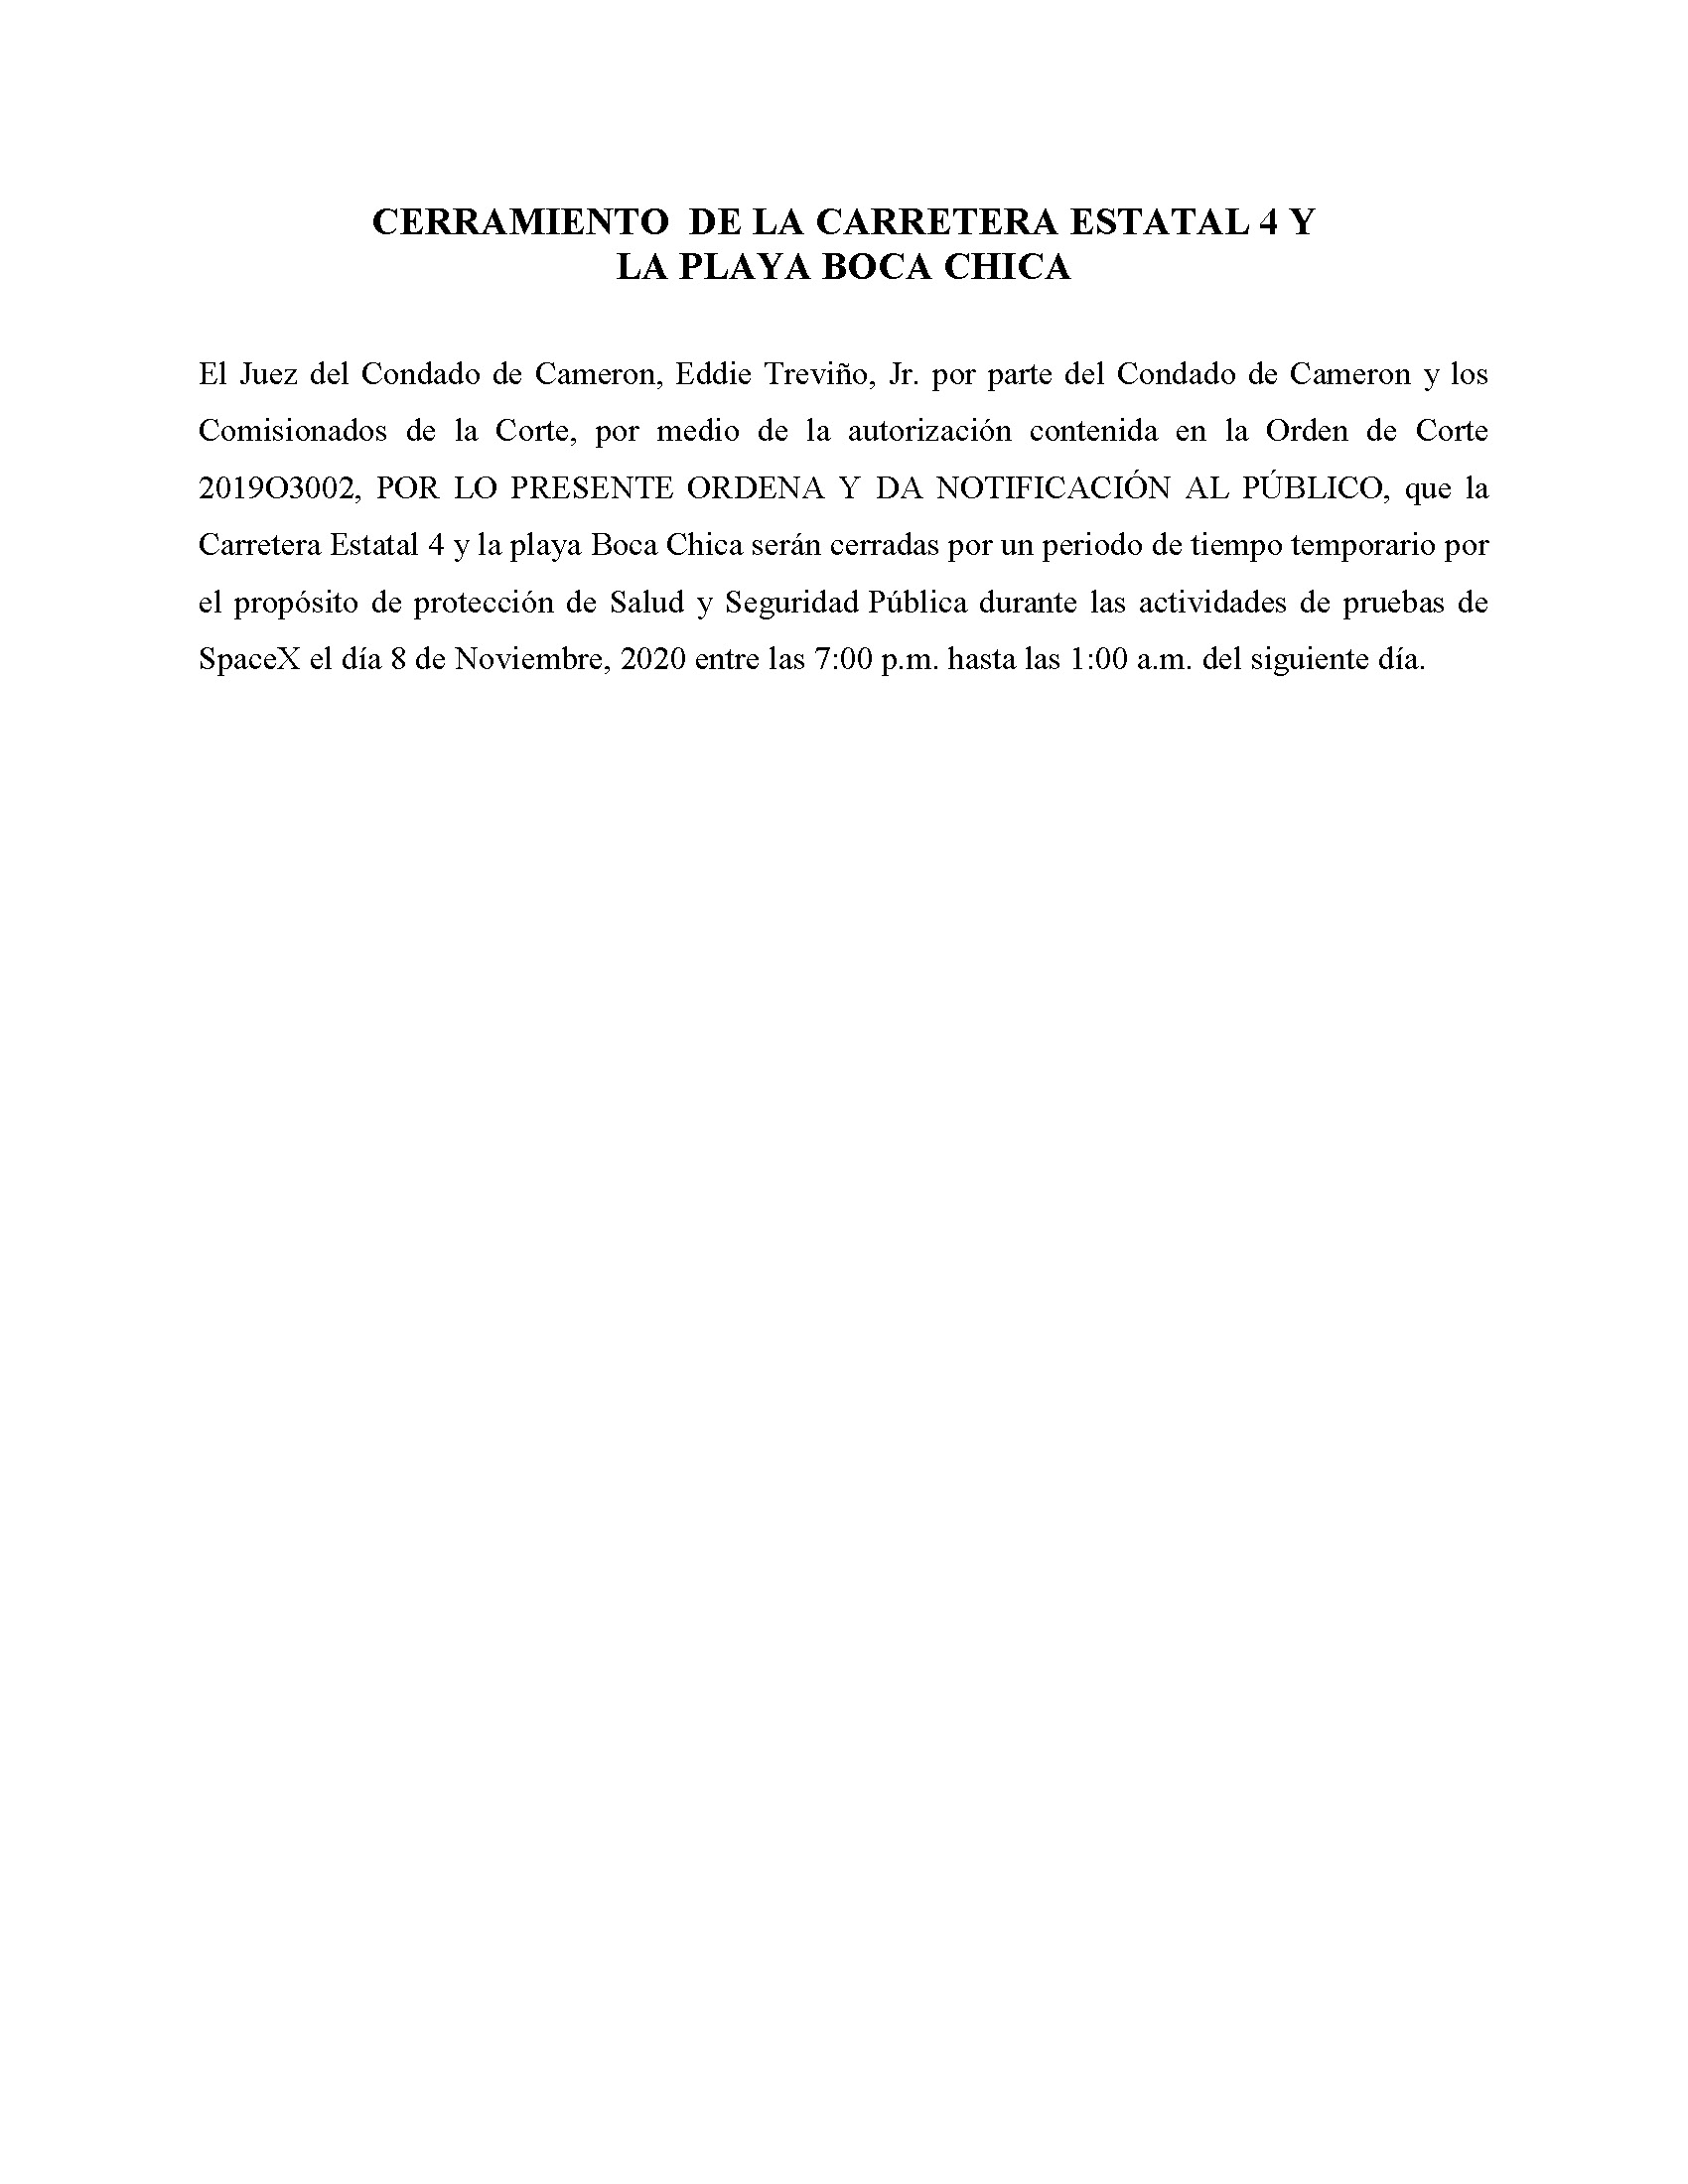 ORDER.CLOSURE OF HIGHWAY 4 Y LA PLAYA BOCA CHICA.SPANISH.11.08.20